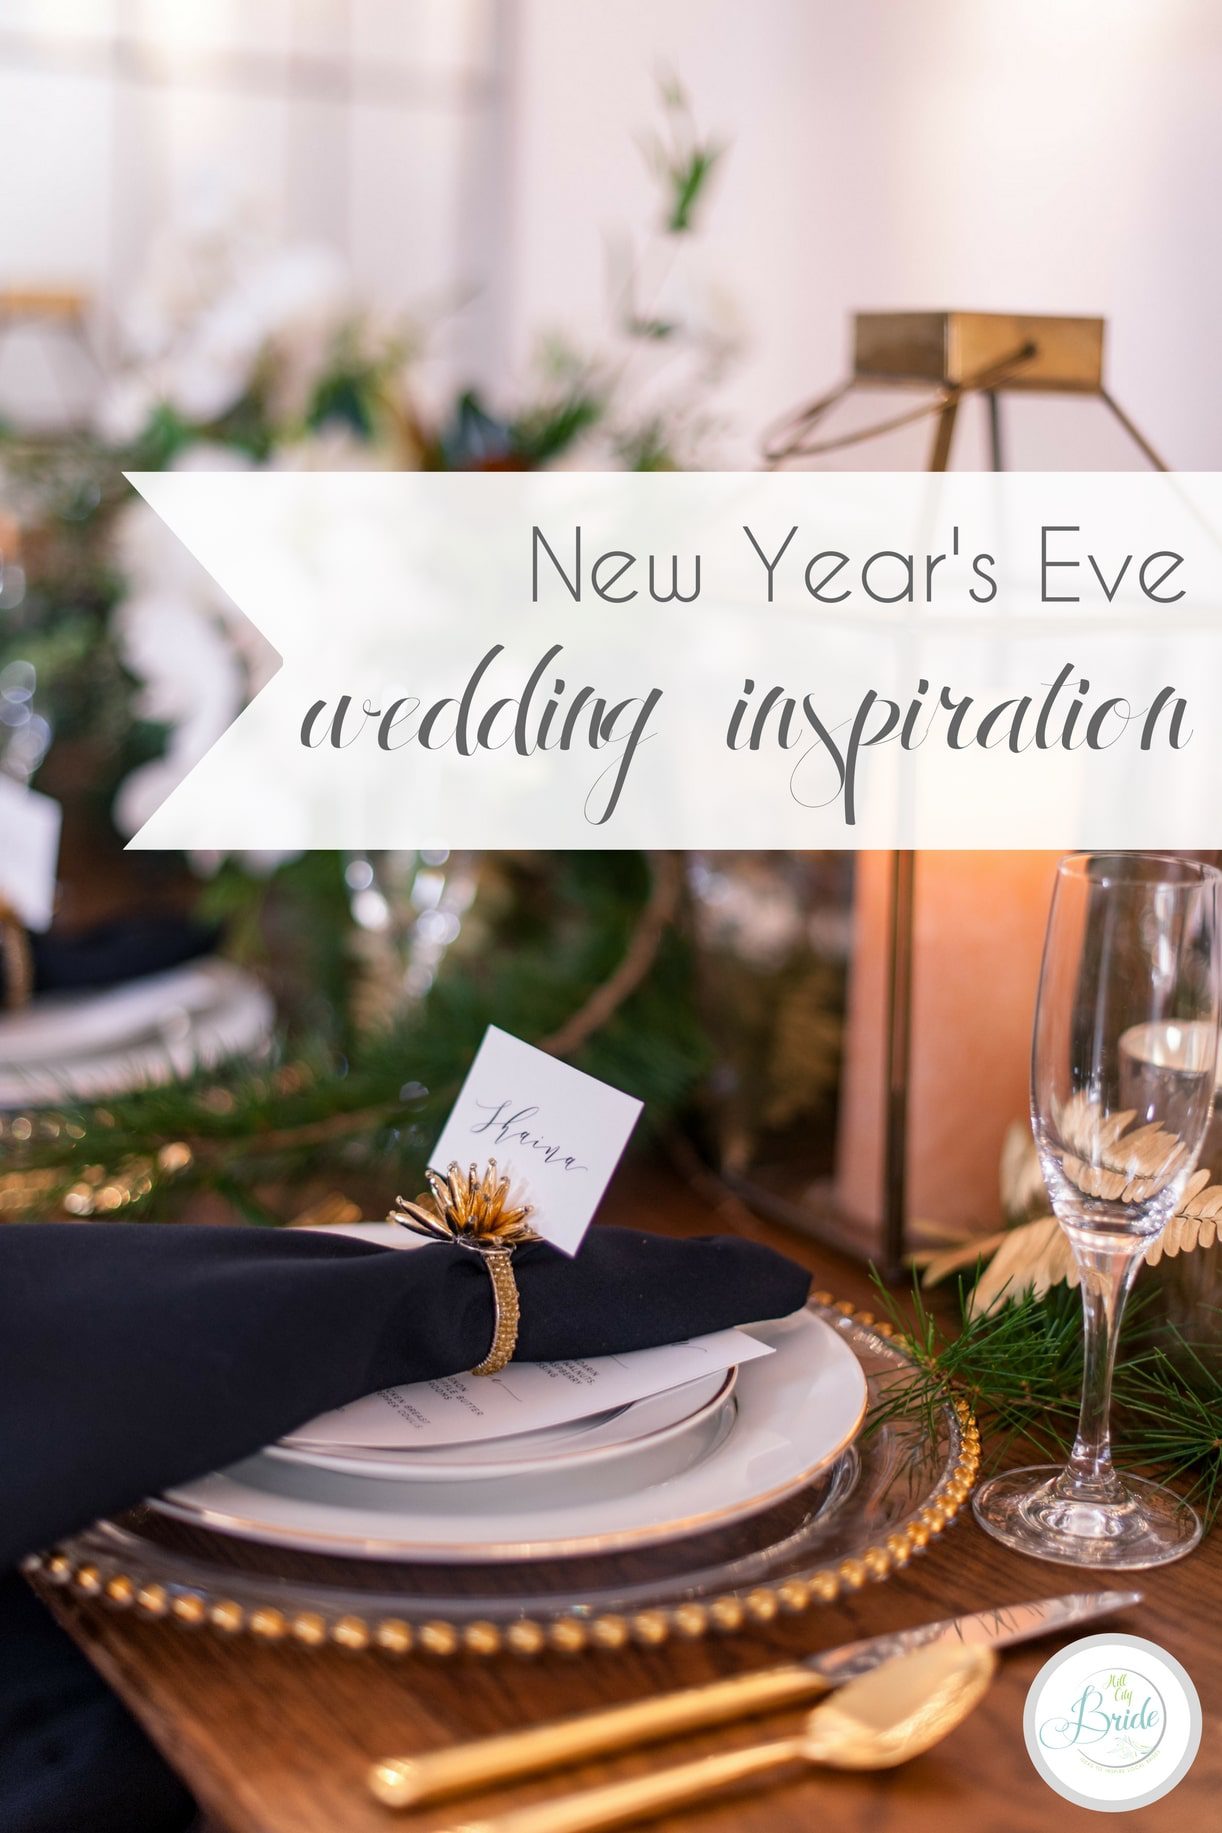 New Year's Eve Wedding Inspiration | Hill City Bride Virginia Wedding Blog